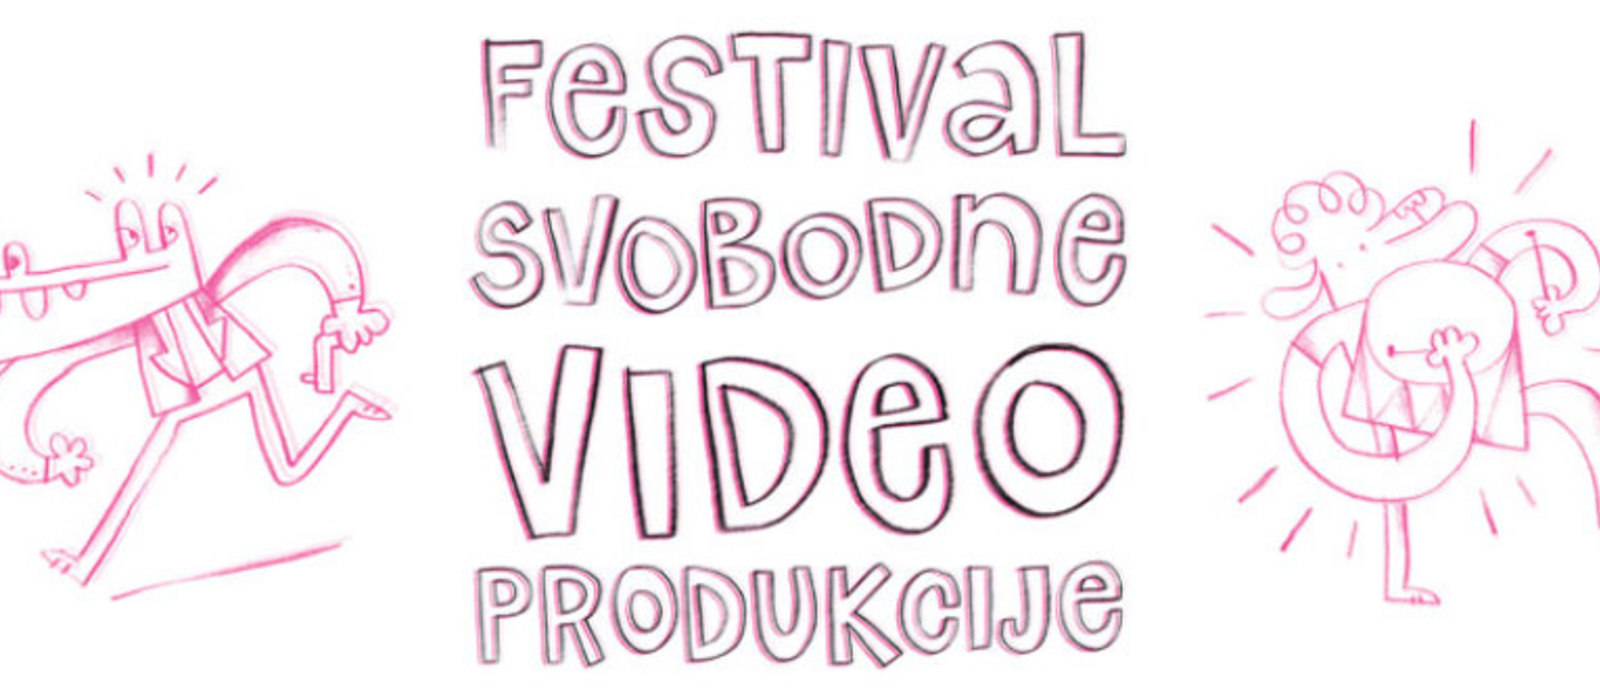 7. Festival Svobodne Video Produkcije - FSVP 2020